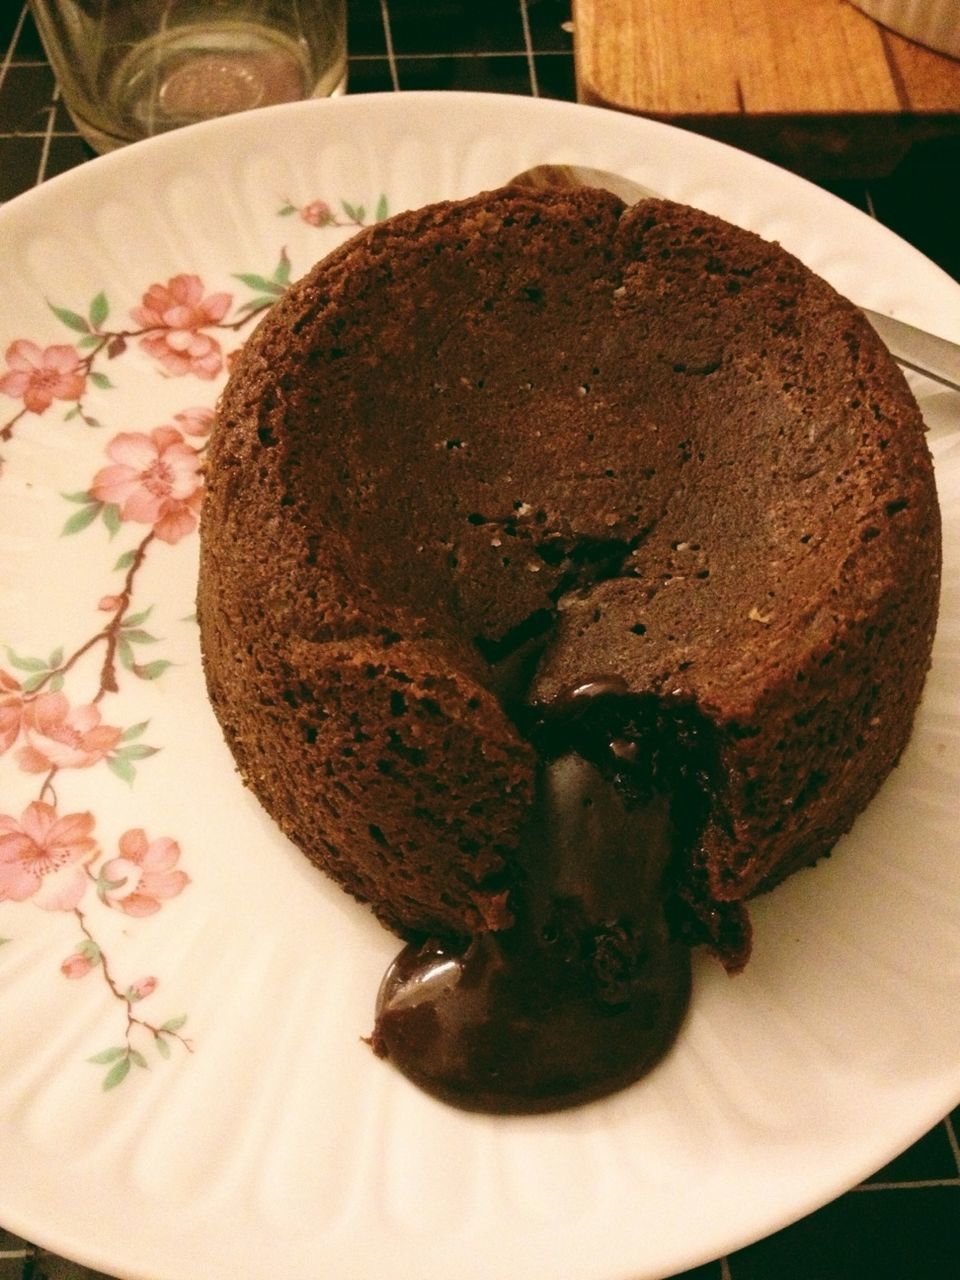 Close-up of mini chocolate cake with warm chocolate fudge sauce